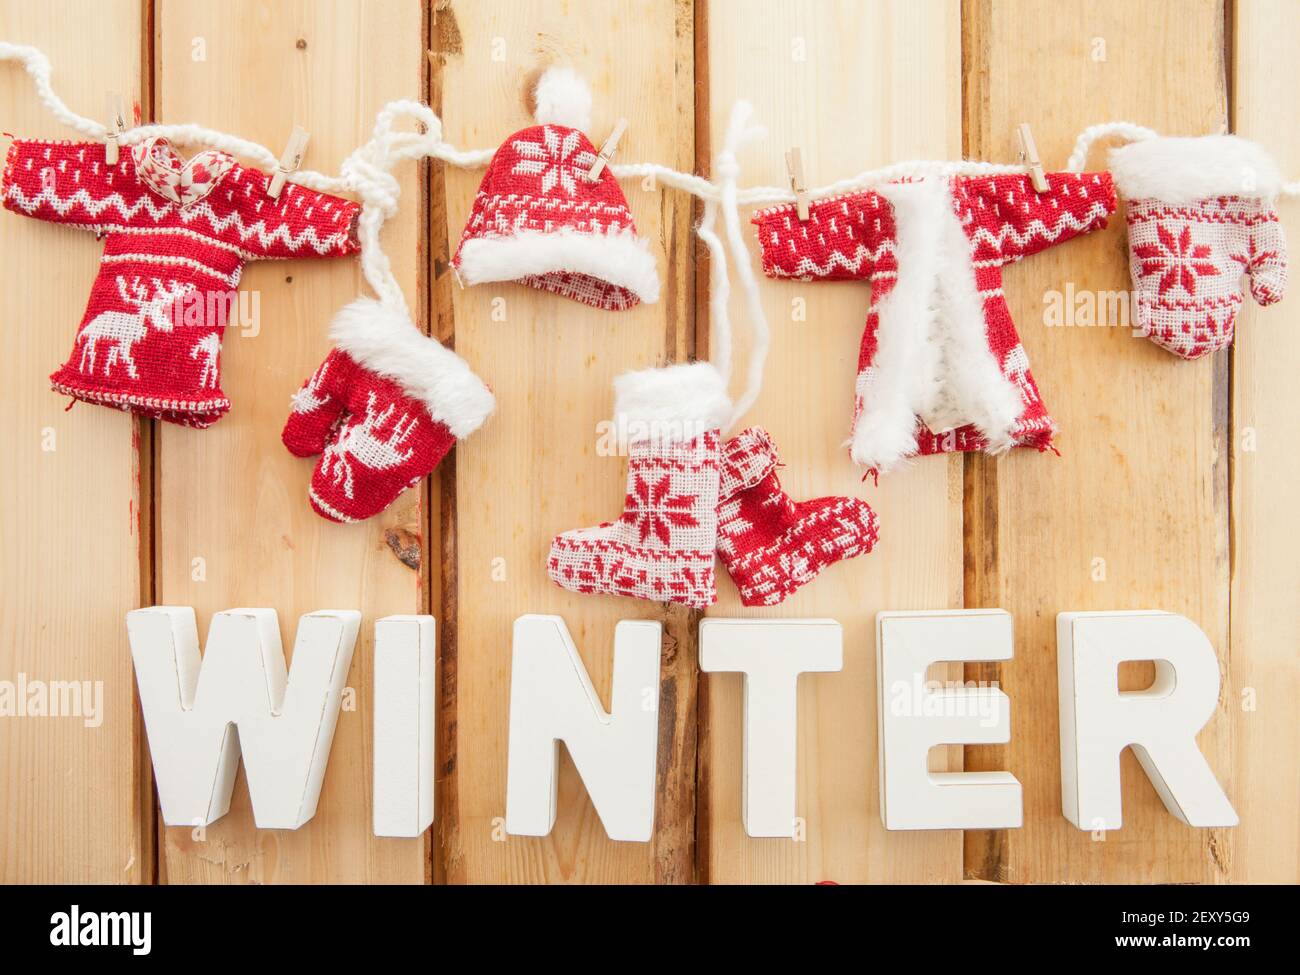 Farbenfrohe Winterkleidung Stockfoto